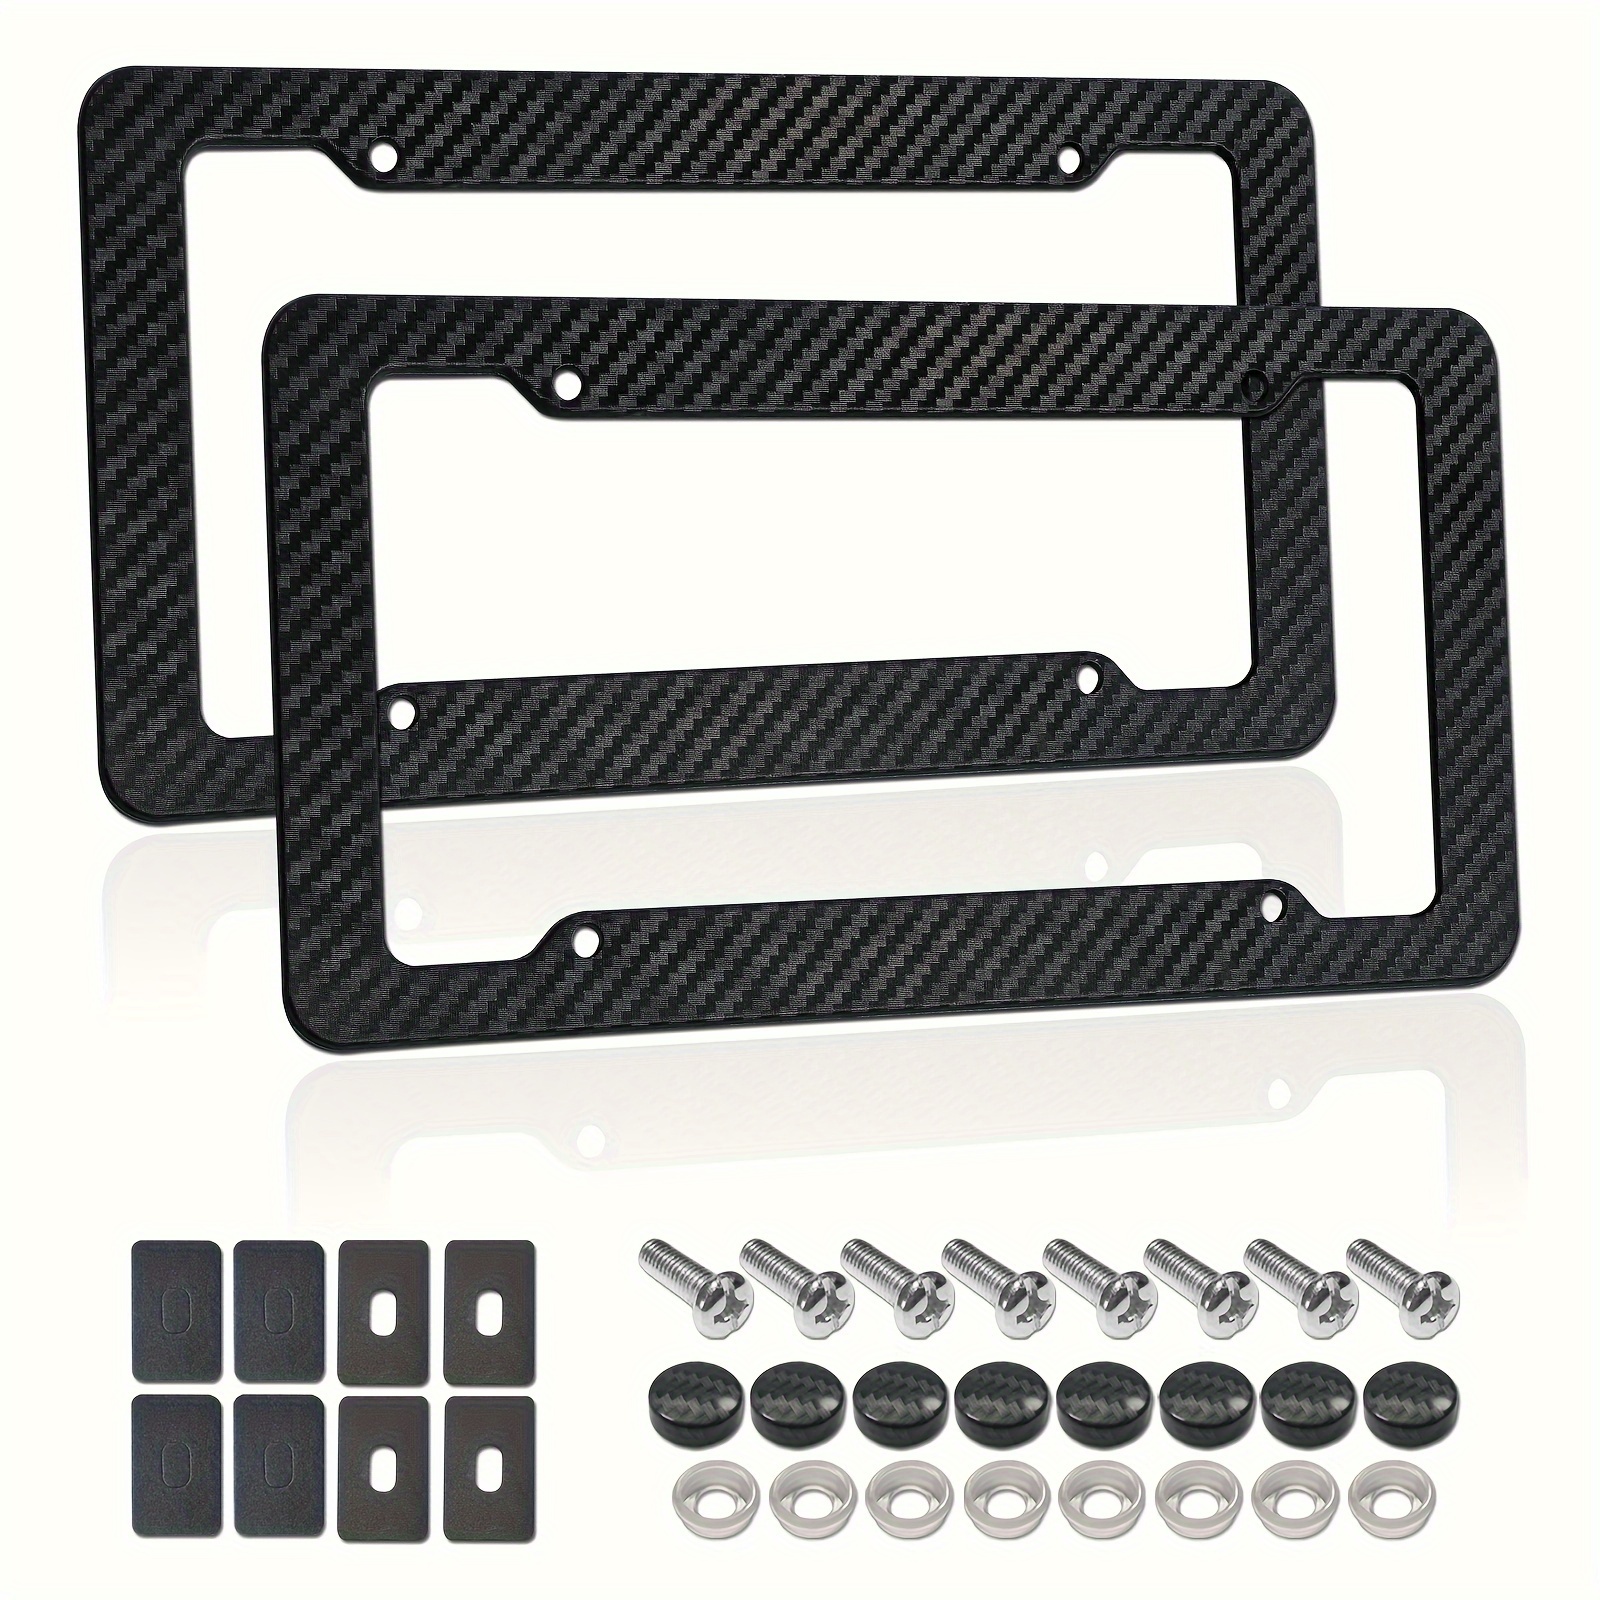 

2pcs Carbon Fiber License Plate Frame-black Plastic Front & Rear Car Tag Holder Cover For Men/women, With Mount Hardware, Screws, Caps, Rattle Proof Pads